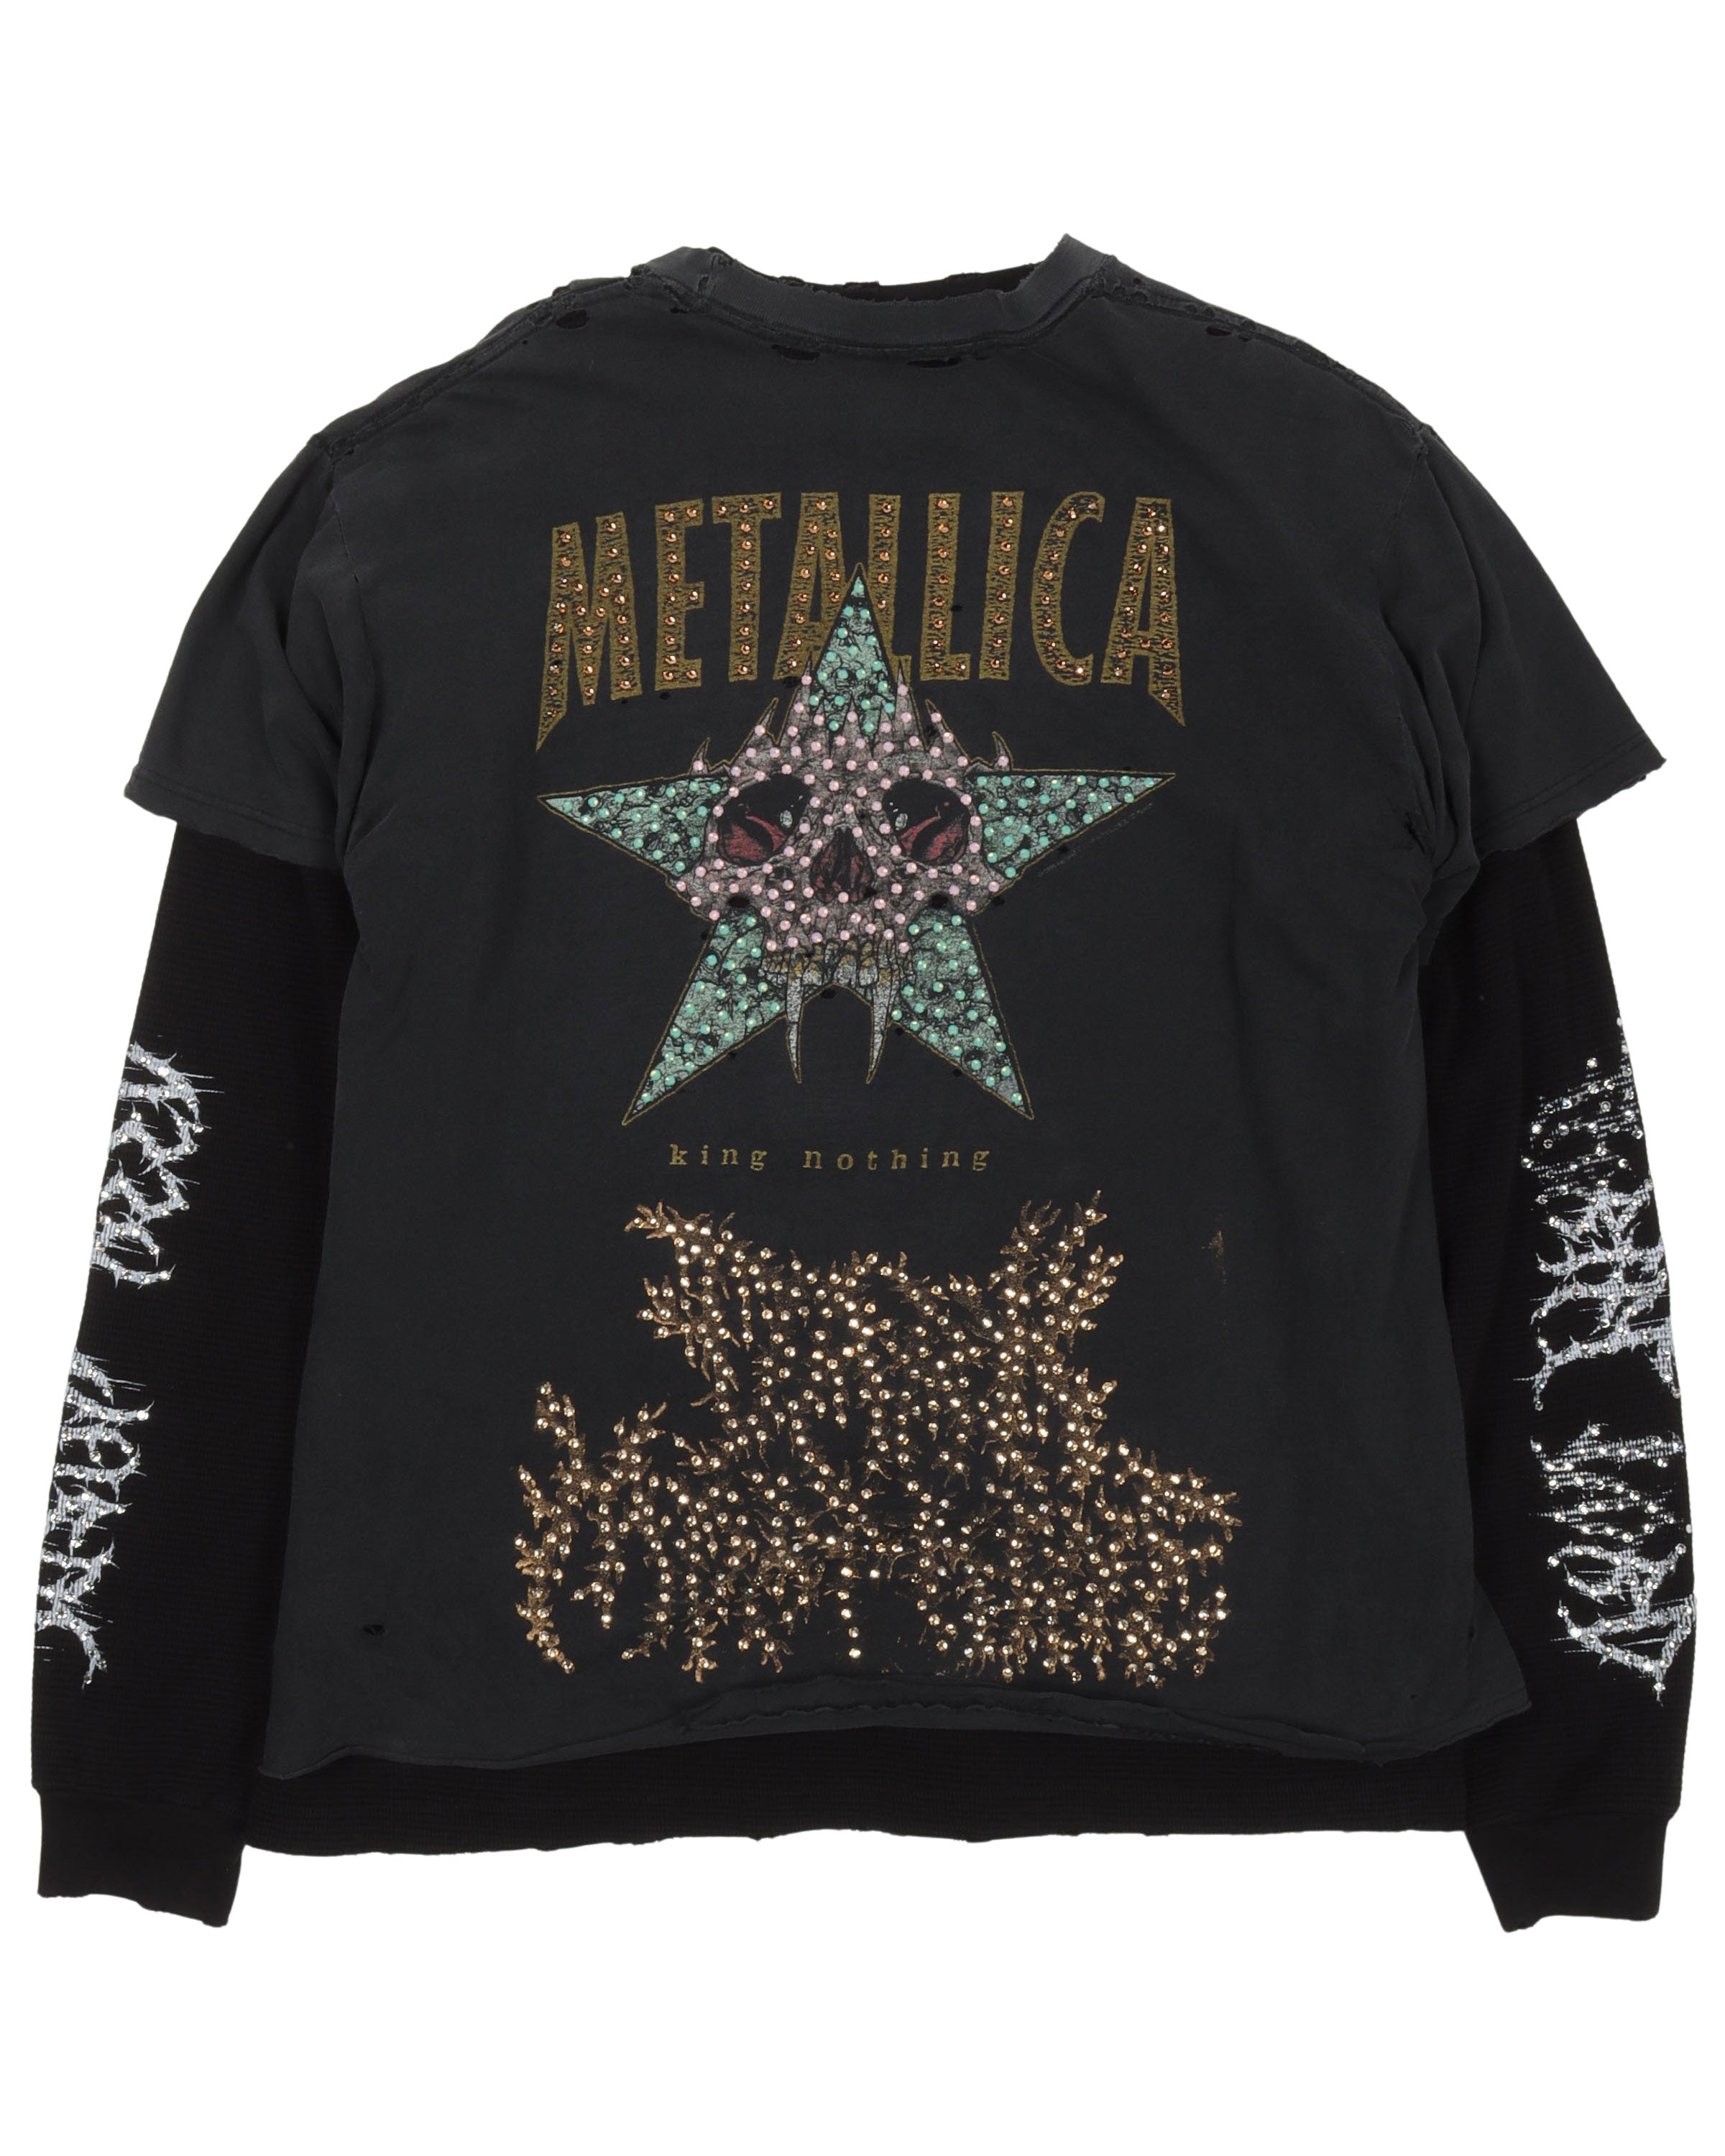 Justin Reed x Thrift Lord Metallica "King Nothing" T-Shirt